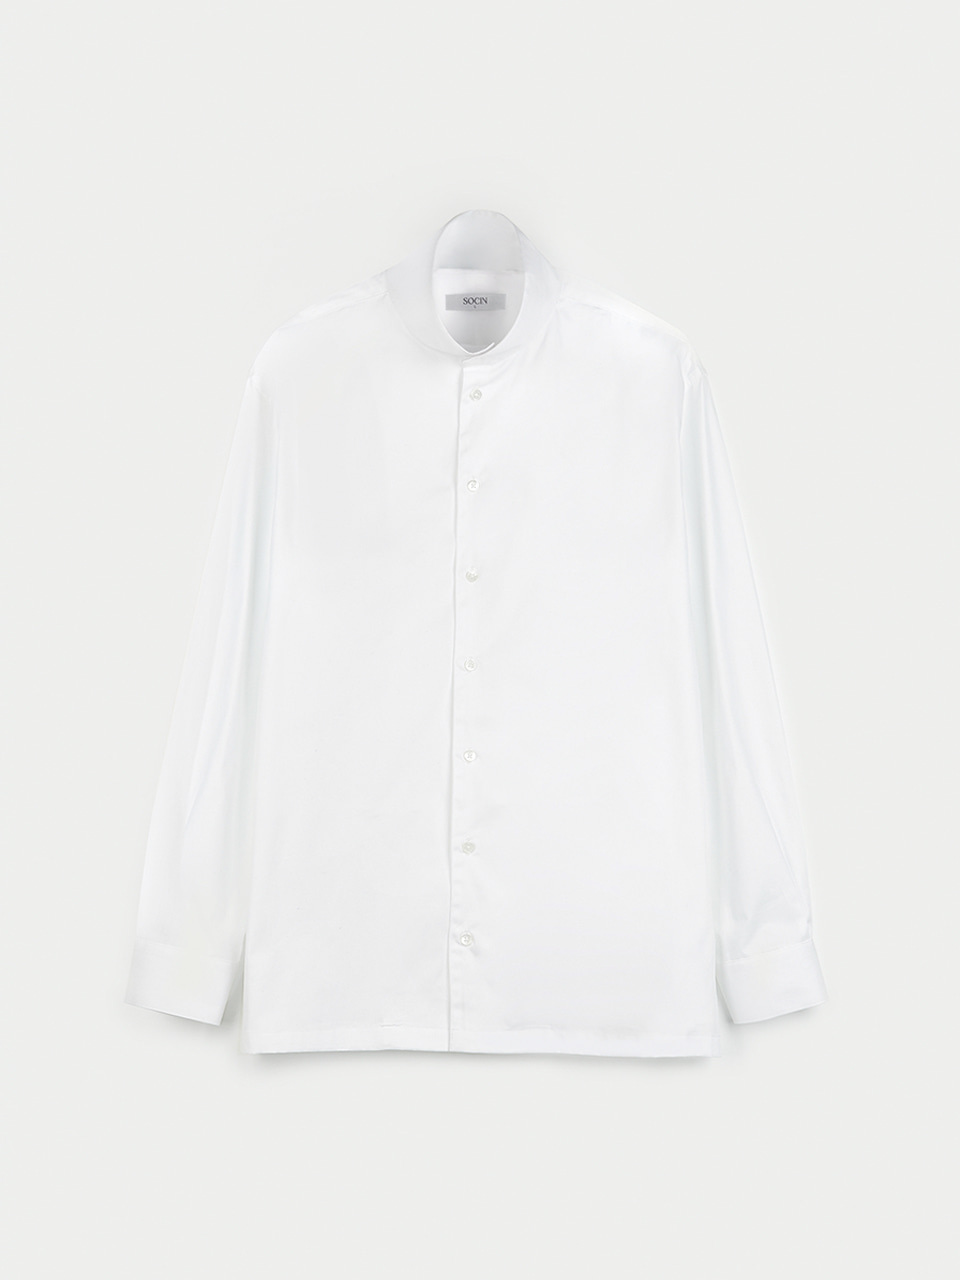 Twill Cotton High Neck Shirts (White)